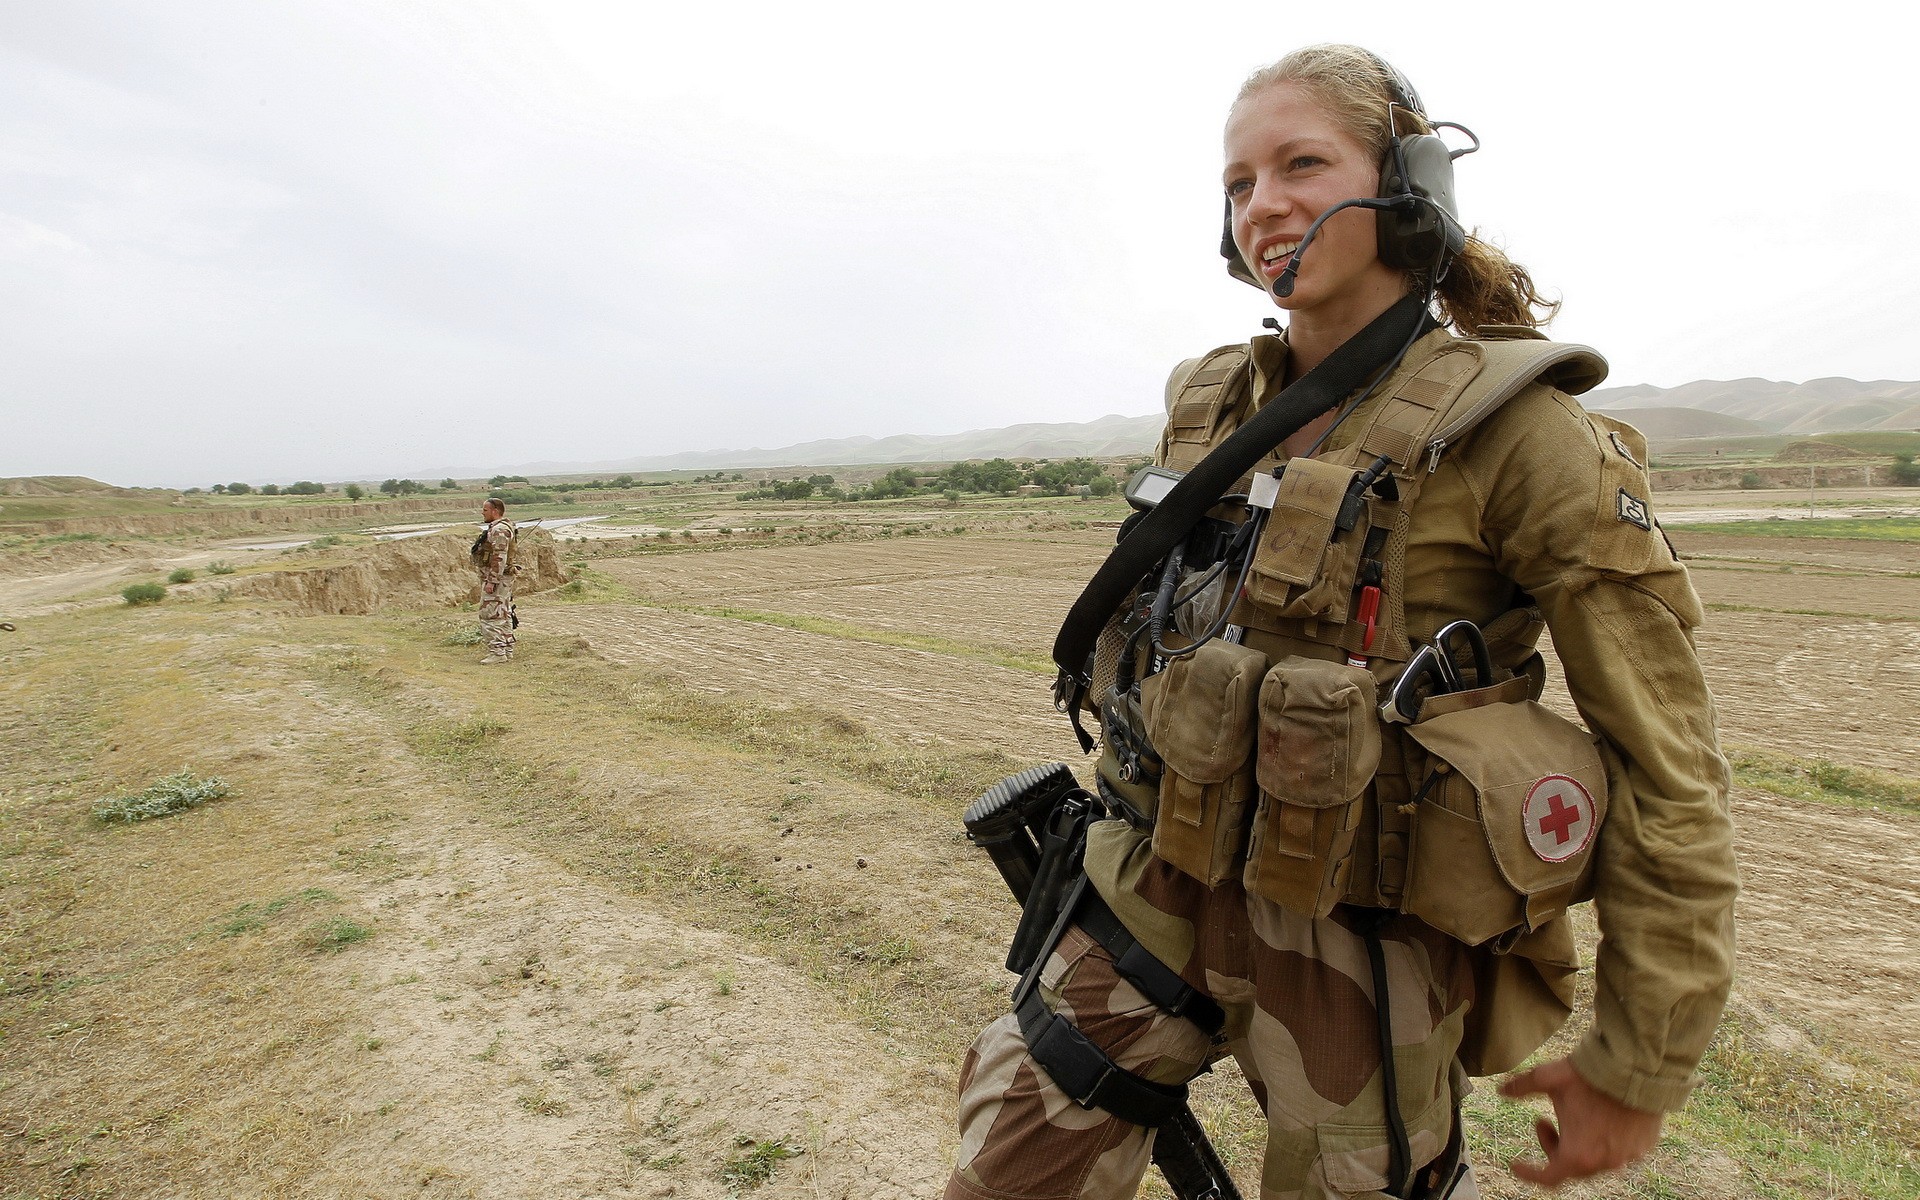 People 1920x1200 women weapon military uniform military girls with guns women outdoors soldier uniform